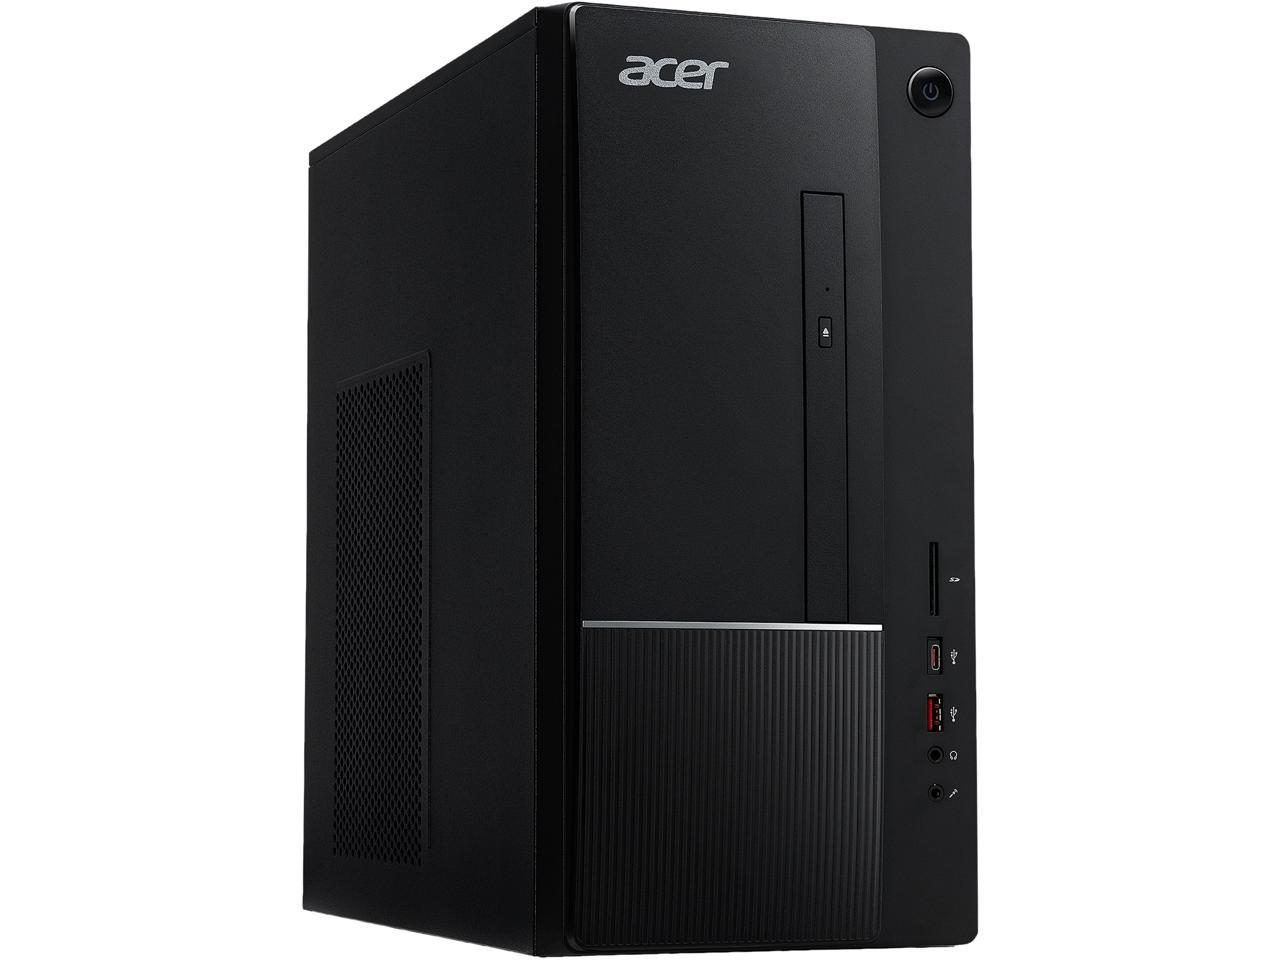 Acer Aspire (TC-865-UR15) - Desktop PC - Intel Core i5-9400 (6-Core, 2.9 GHz), Intel UHD Graphics 630, 8 GB DDR4, 512 GB SSD, Tower, Windows 10 Home